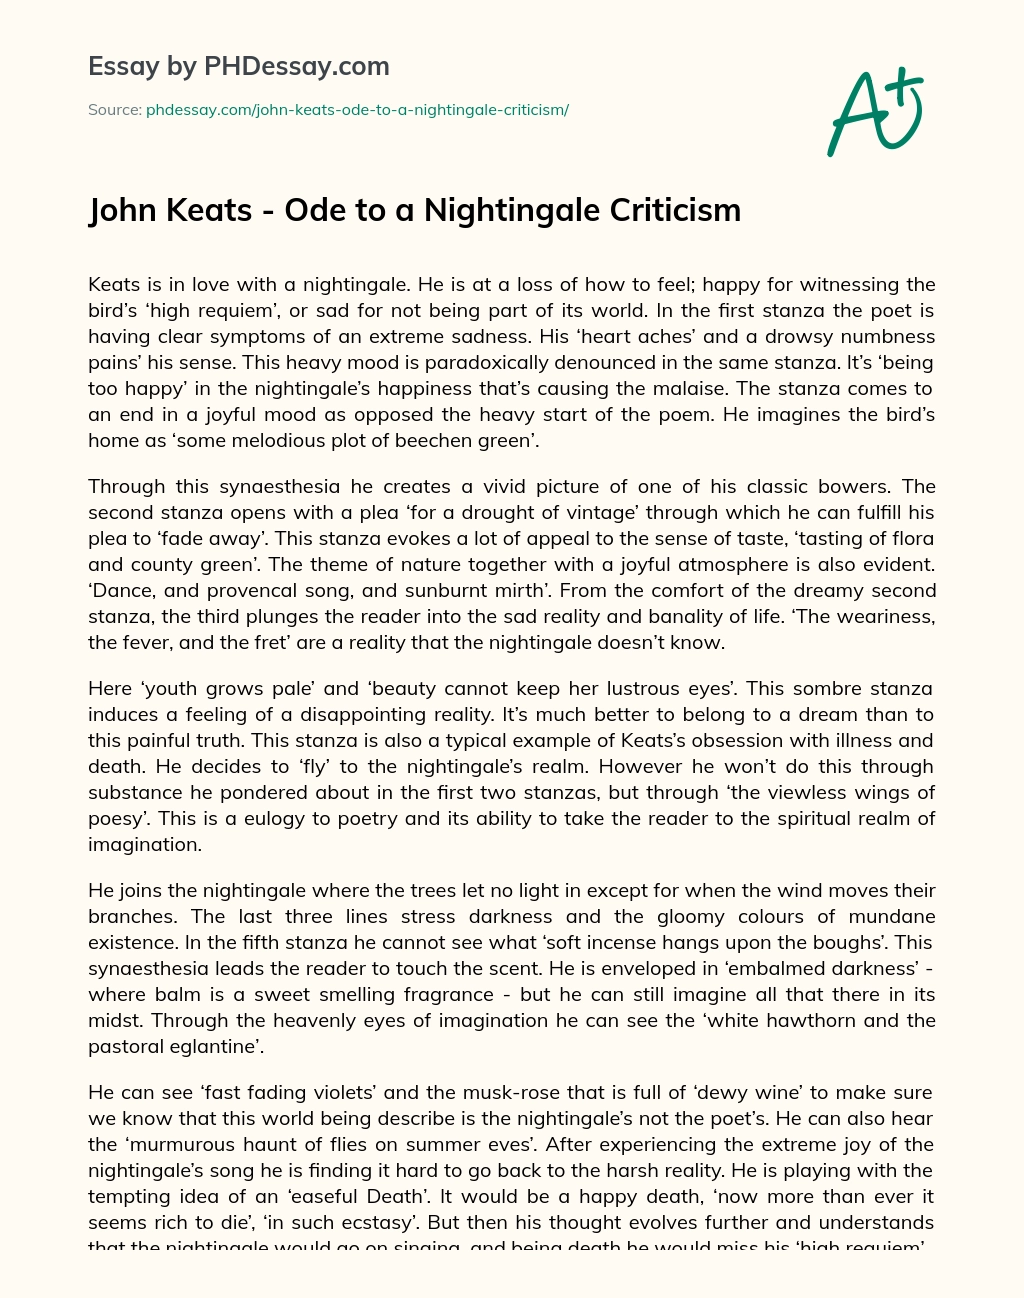 John Keats – Ode to a Nightingale Criticism essay